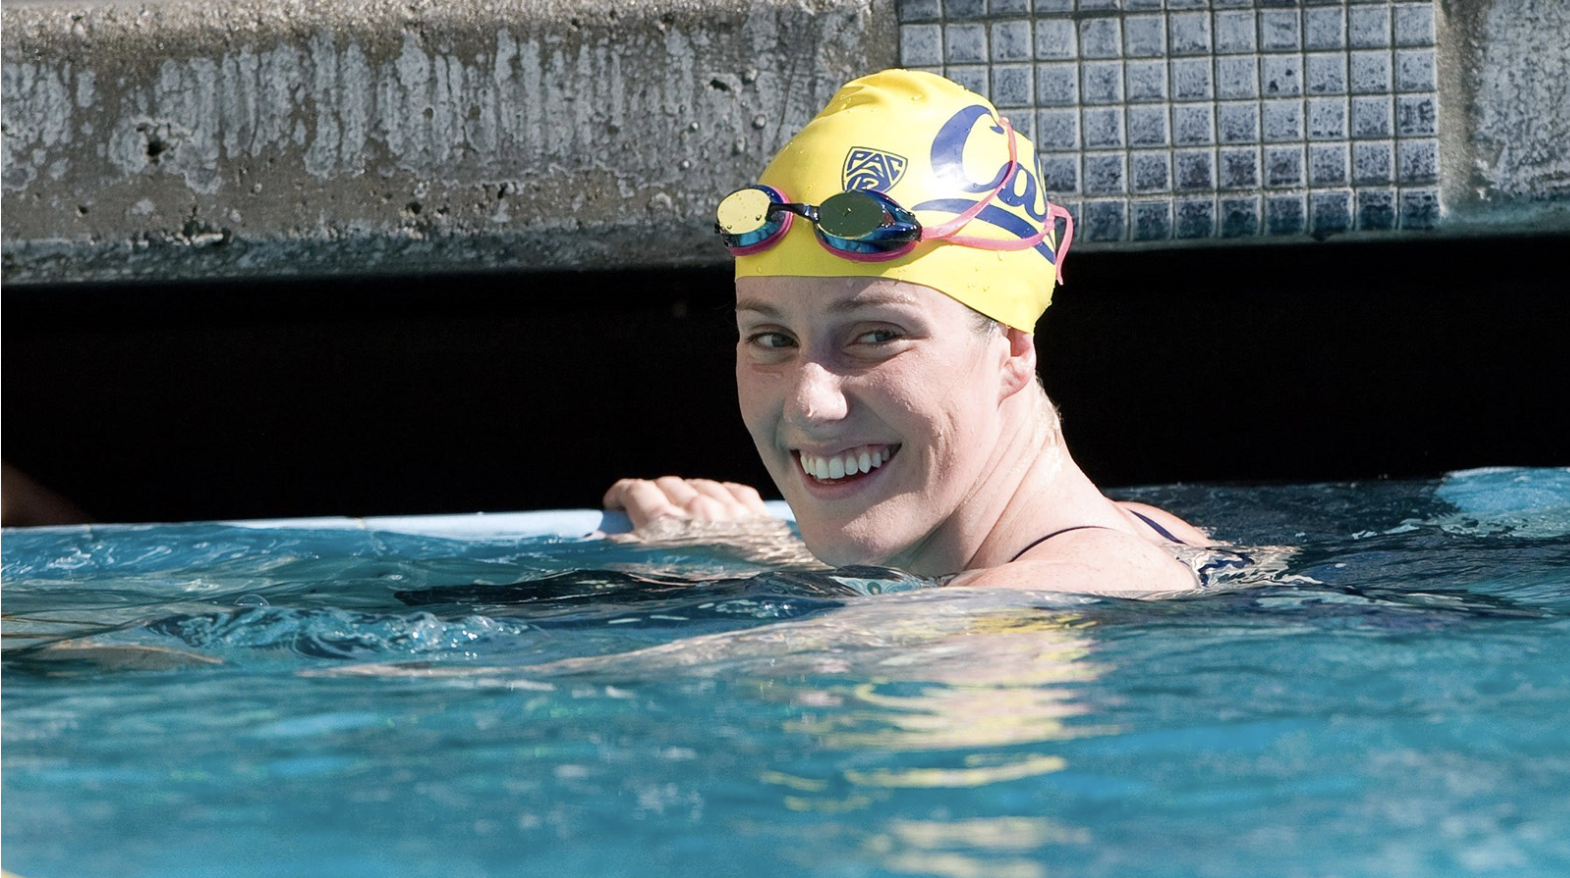 Woman smiling in yellow swim cap at end of pool lap lane